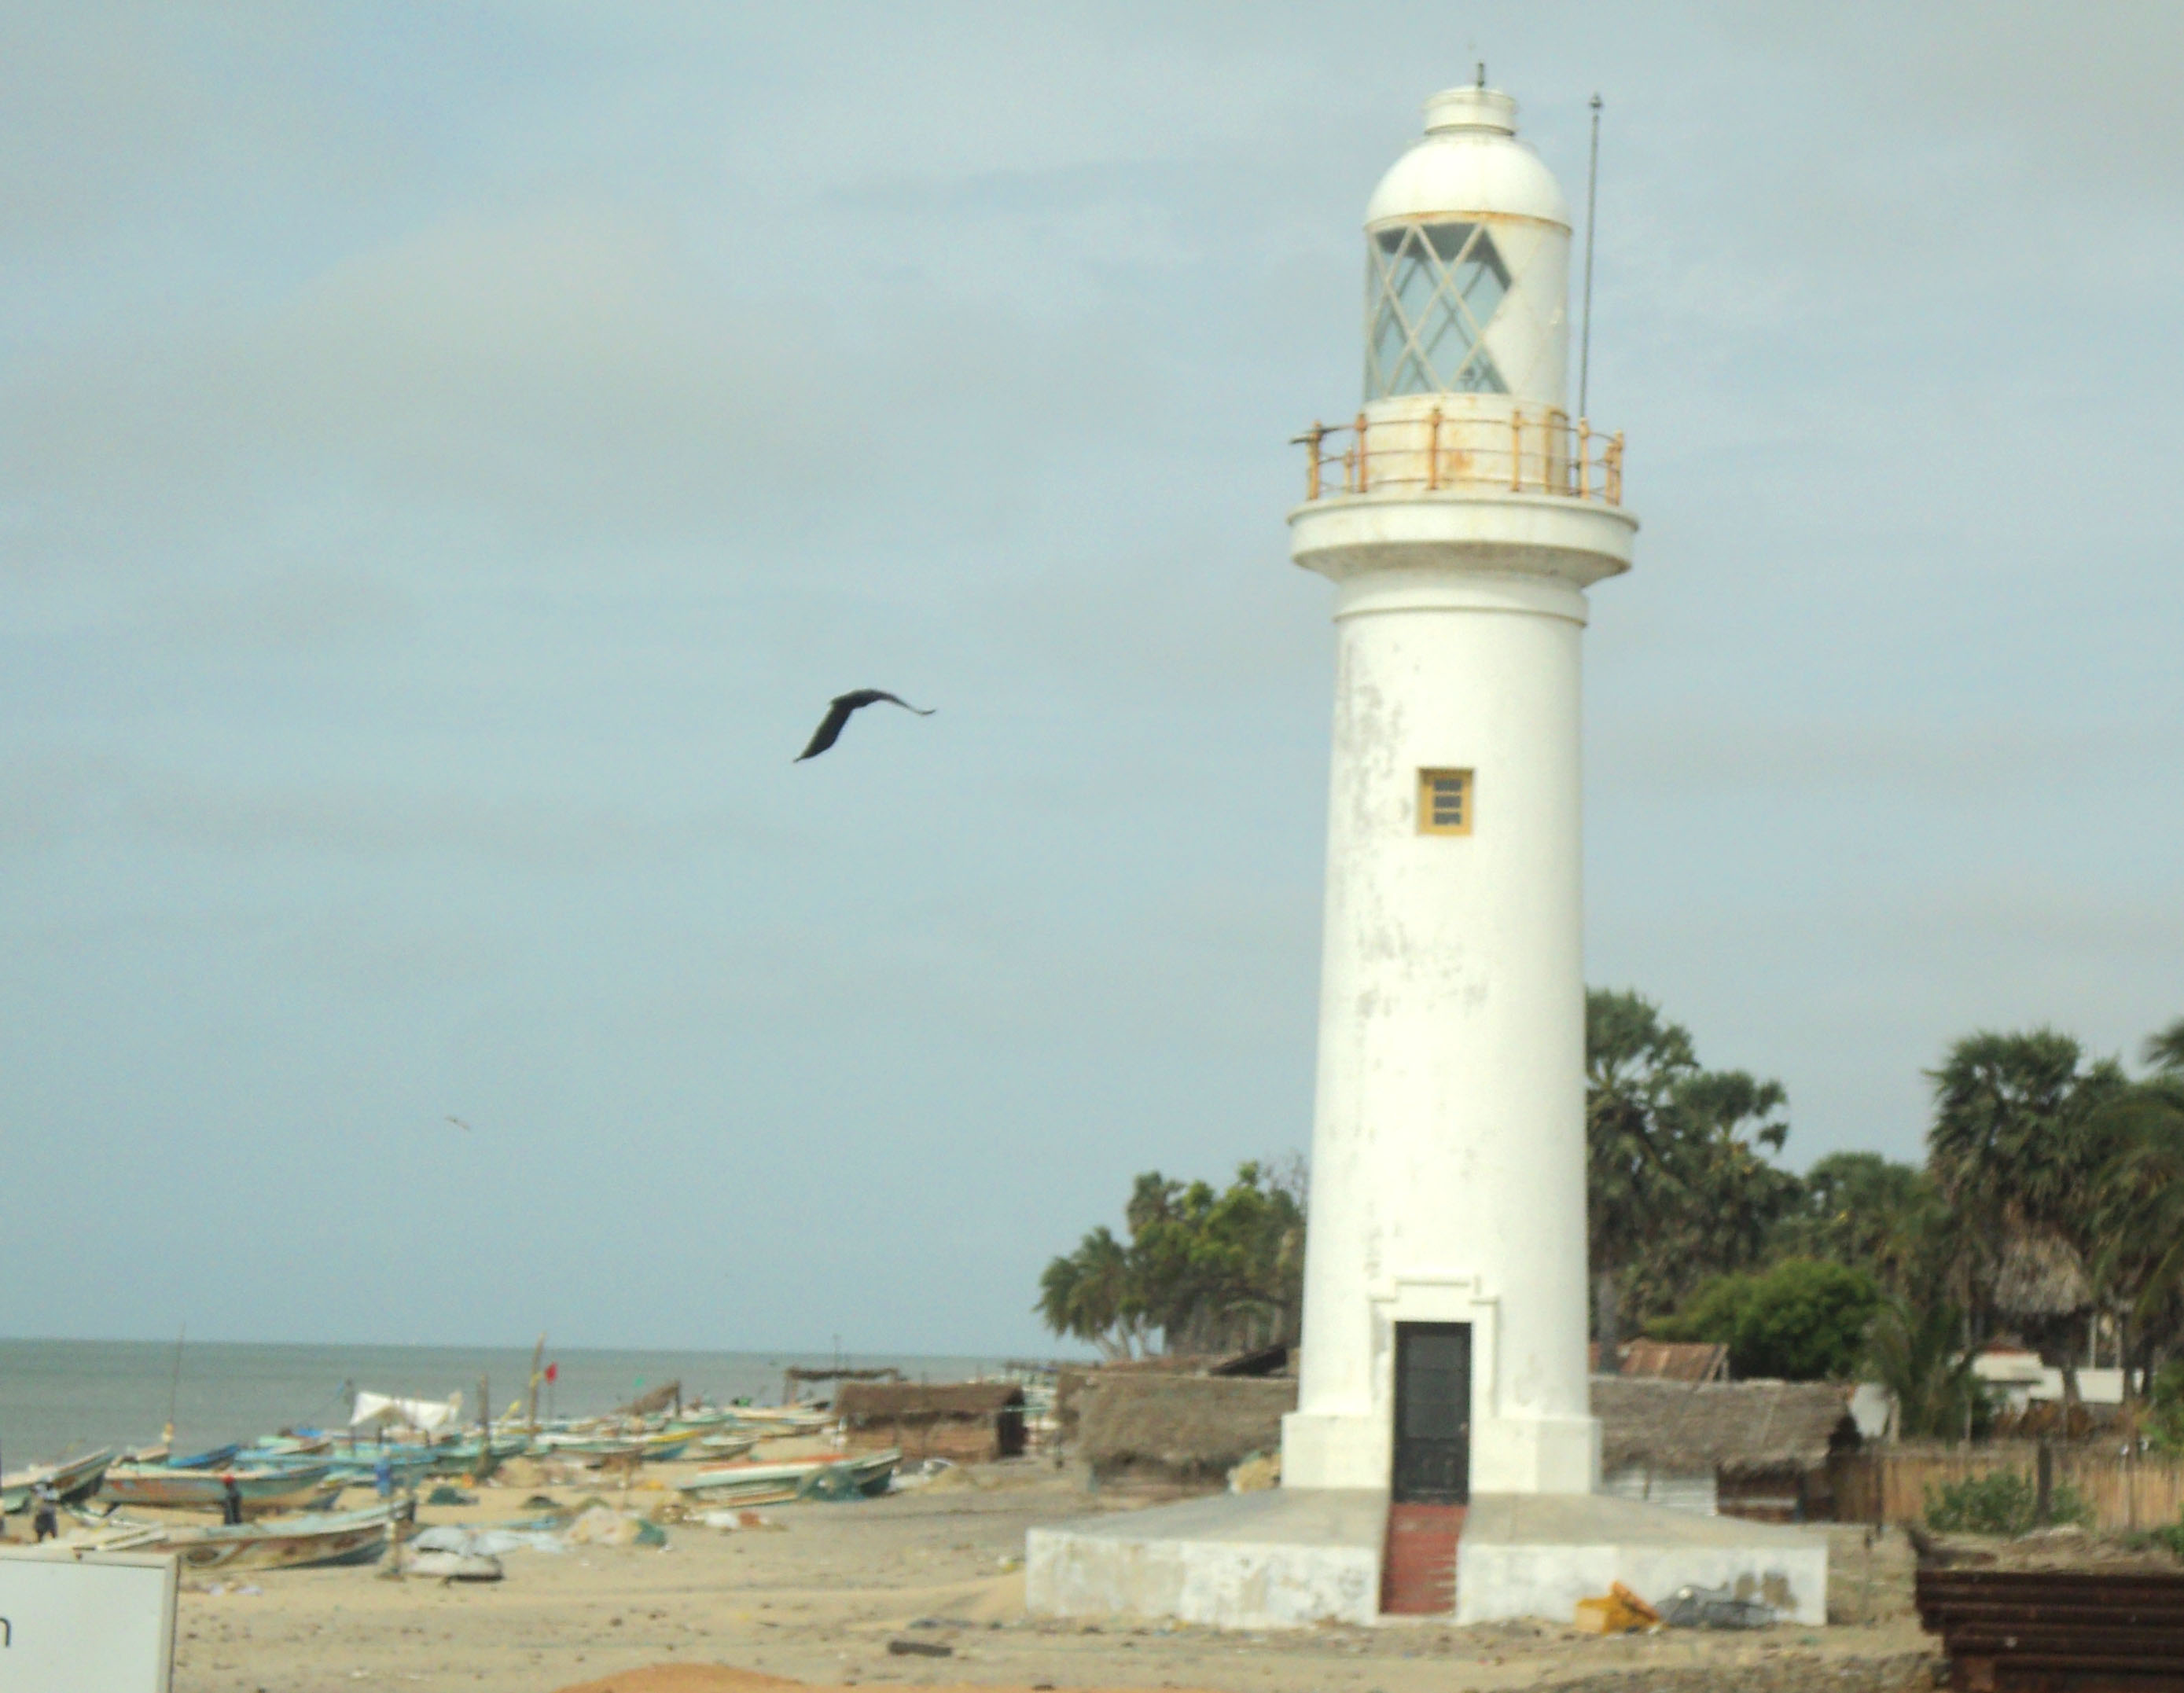 T'mannar Lighthouse